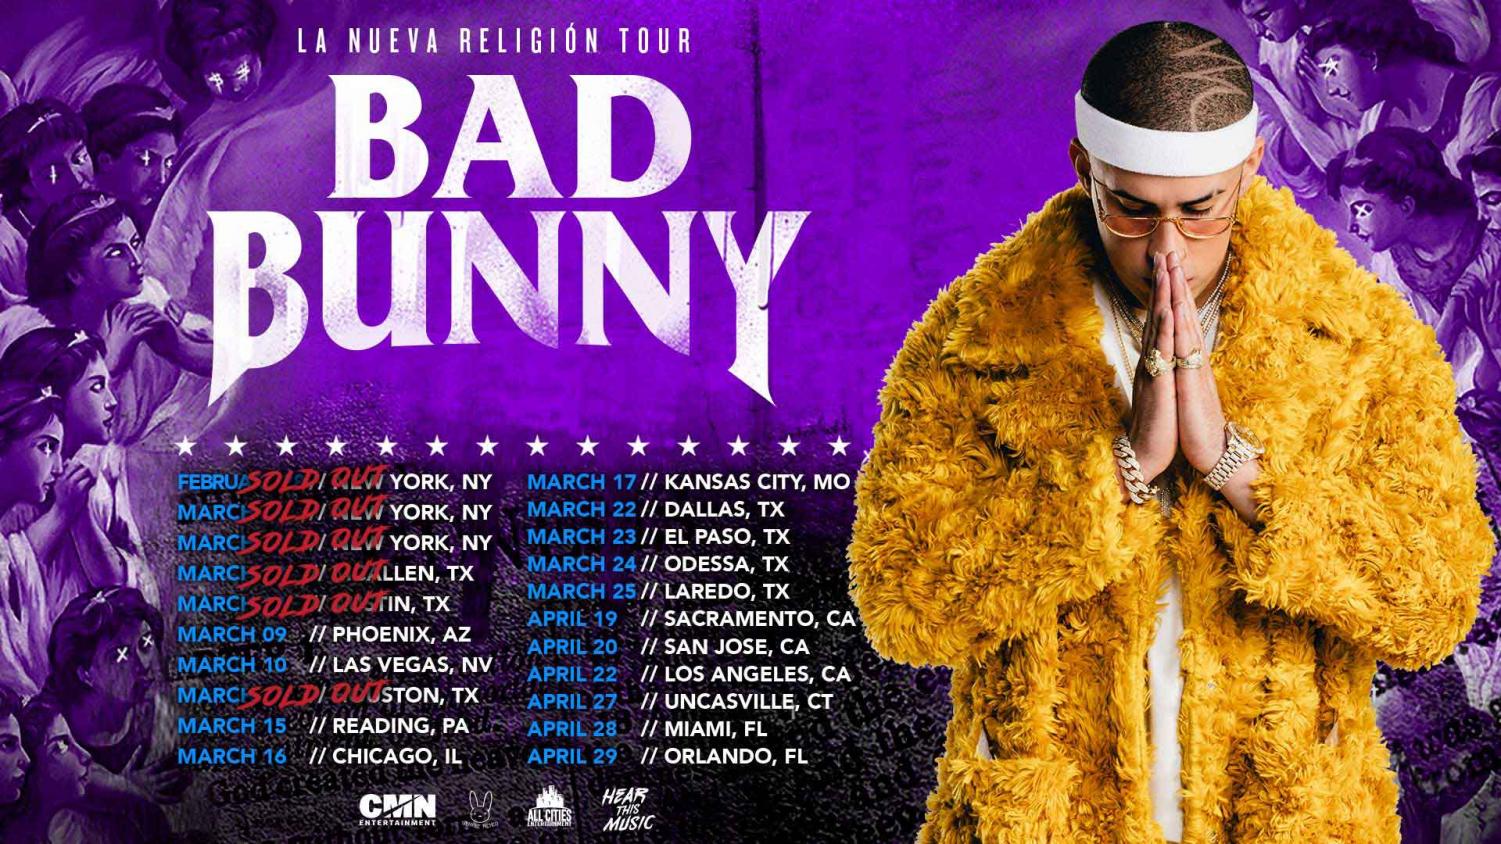 Bad Bunny Returns to the Sun City for “La Nueva Religion Tour” The